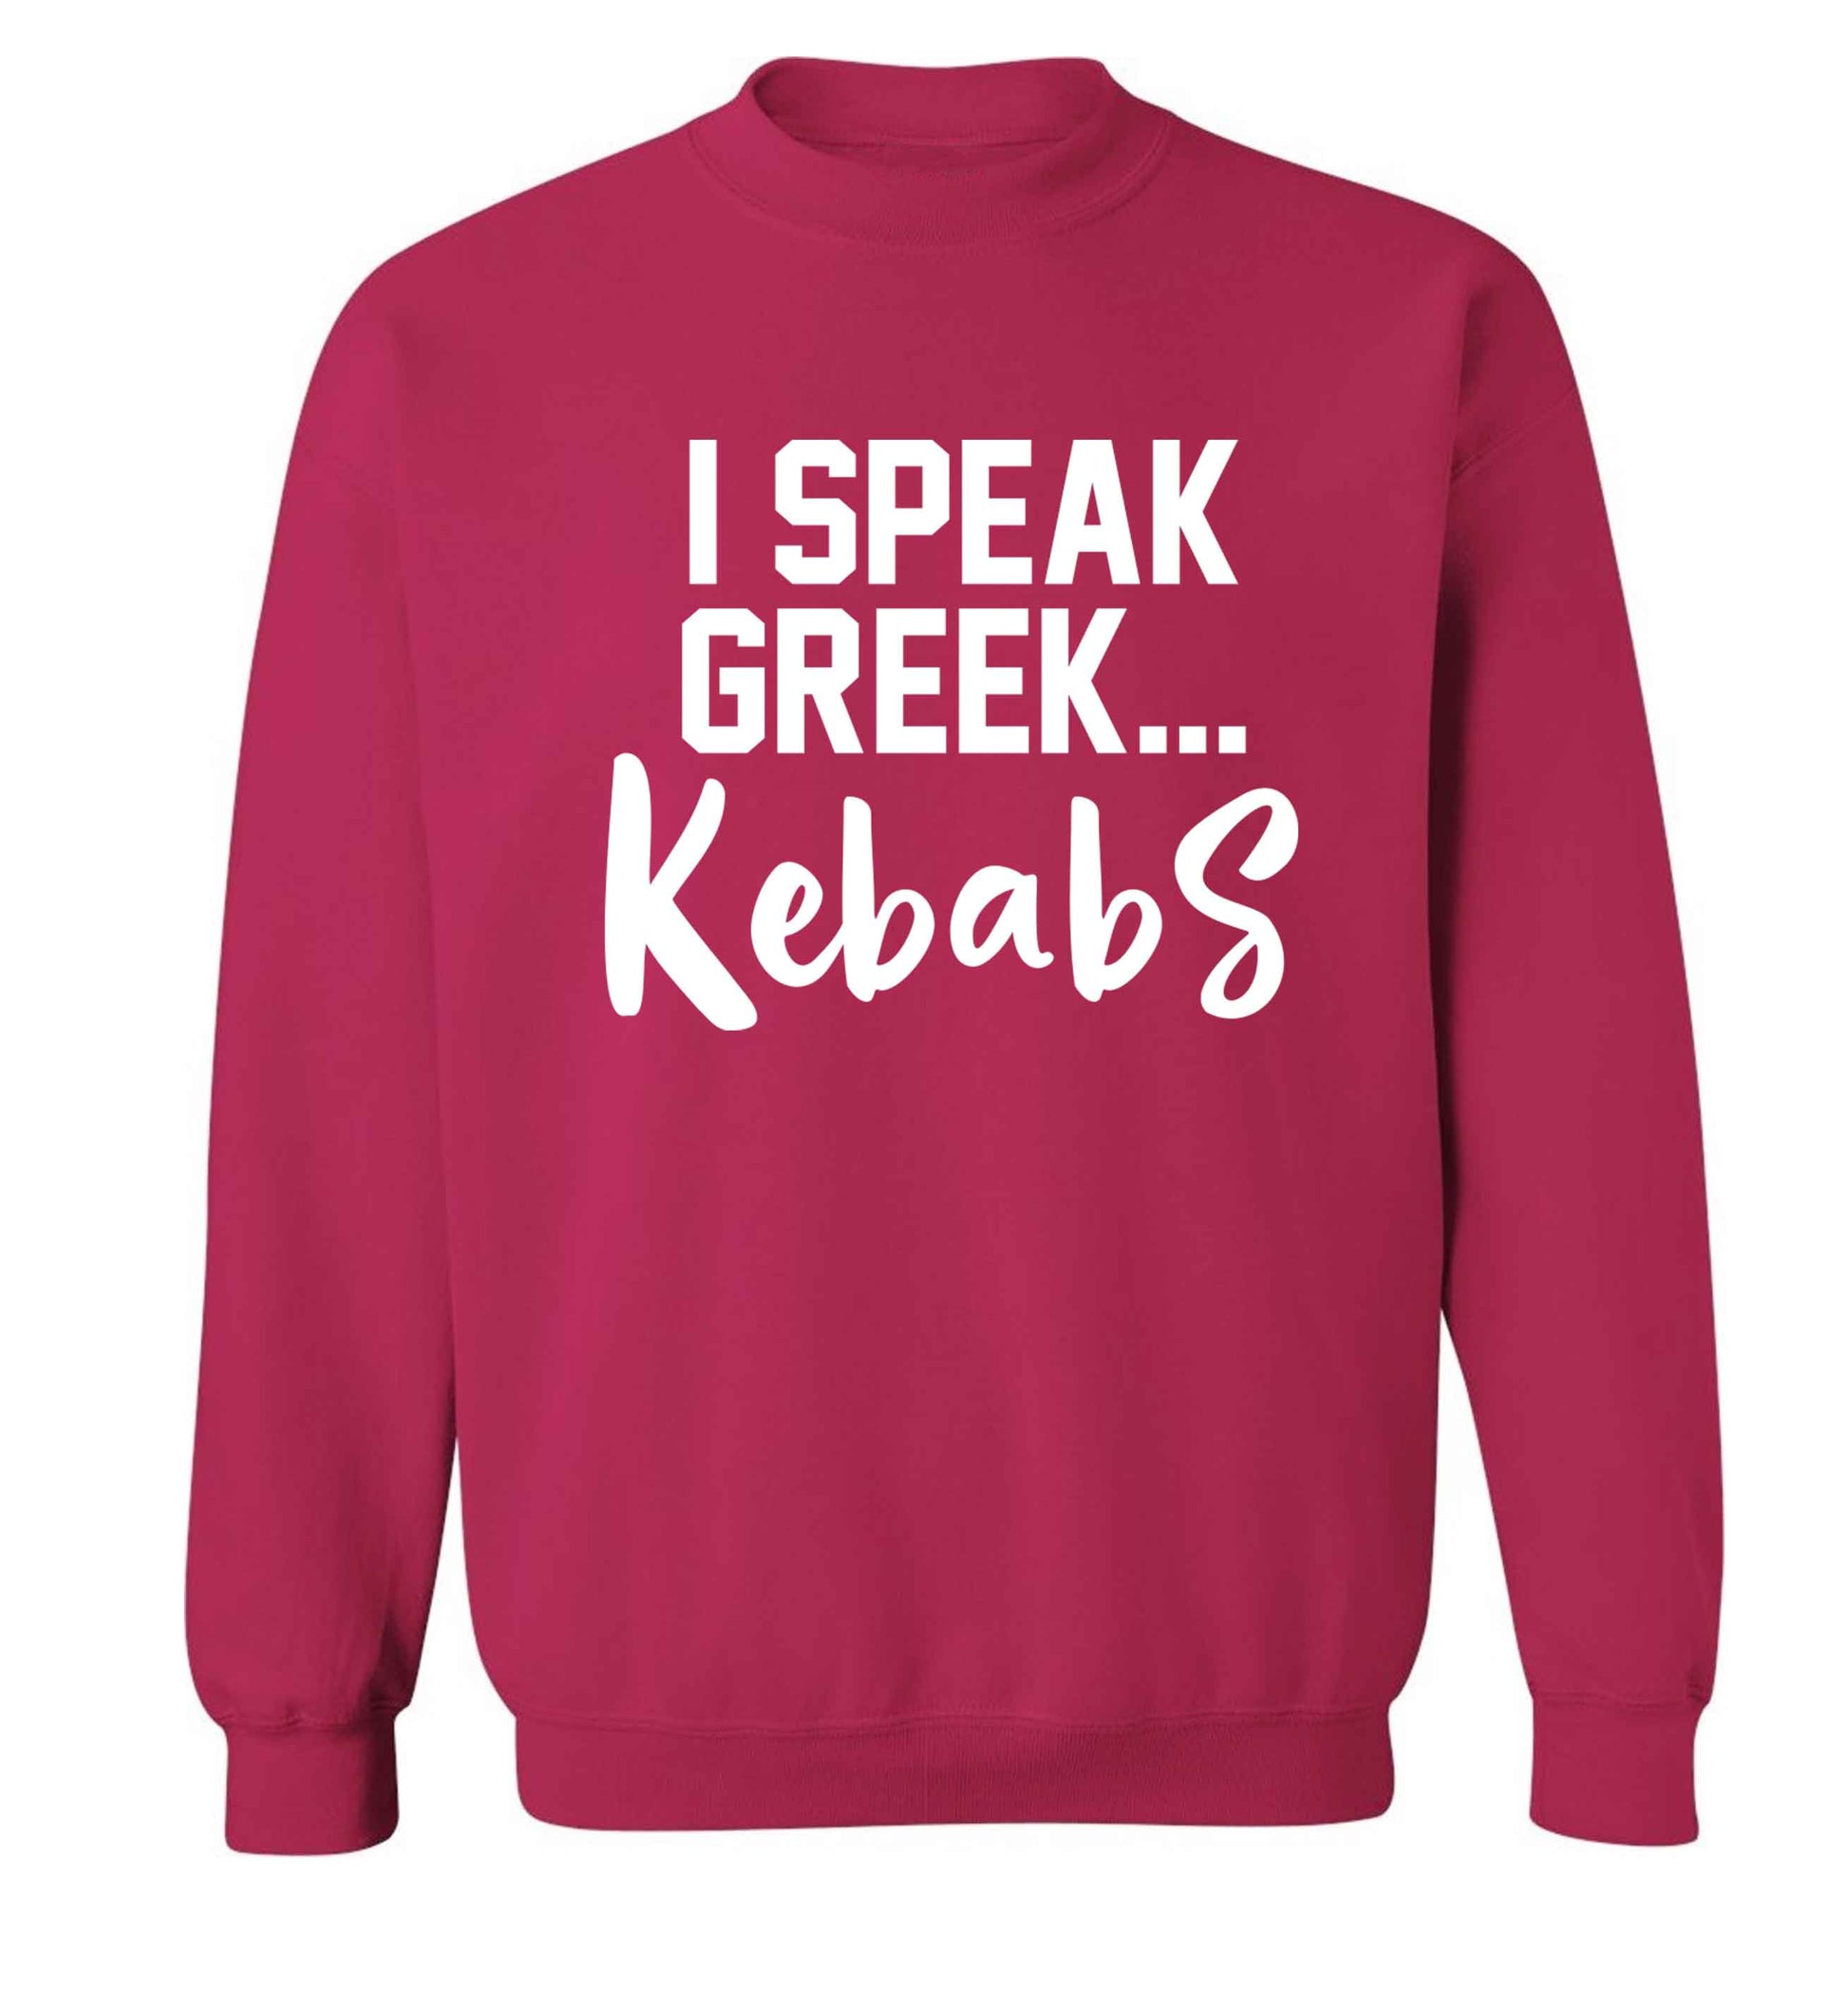 I speak Greek...kebabs Adult's unisex pink Sweater 2XL